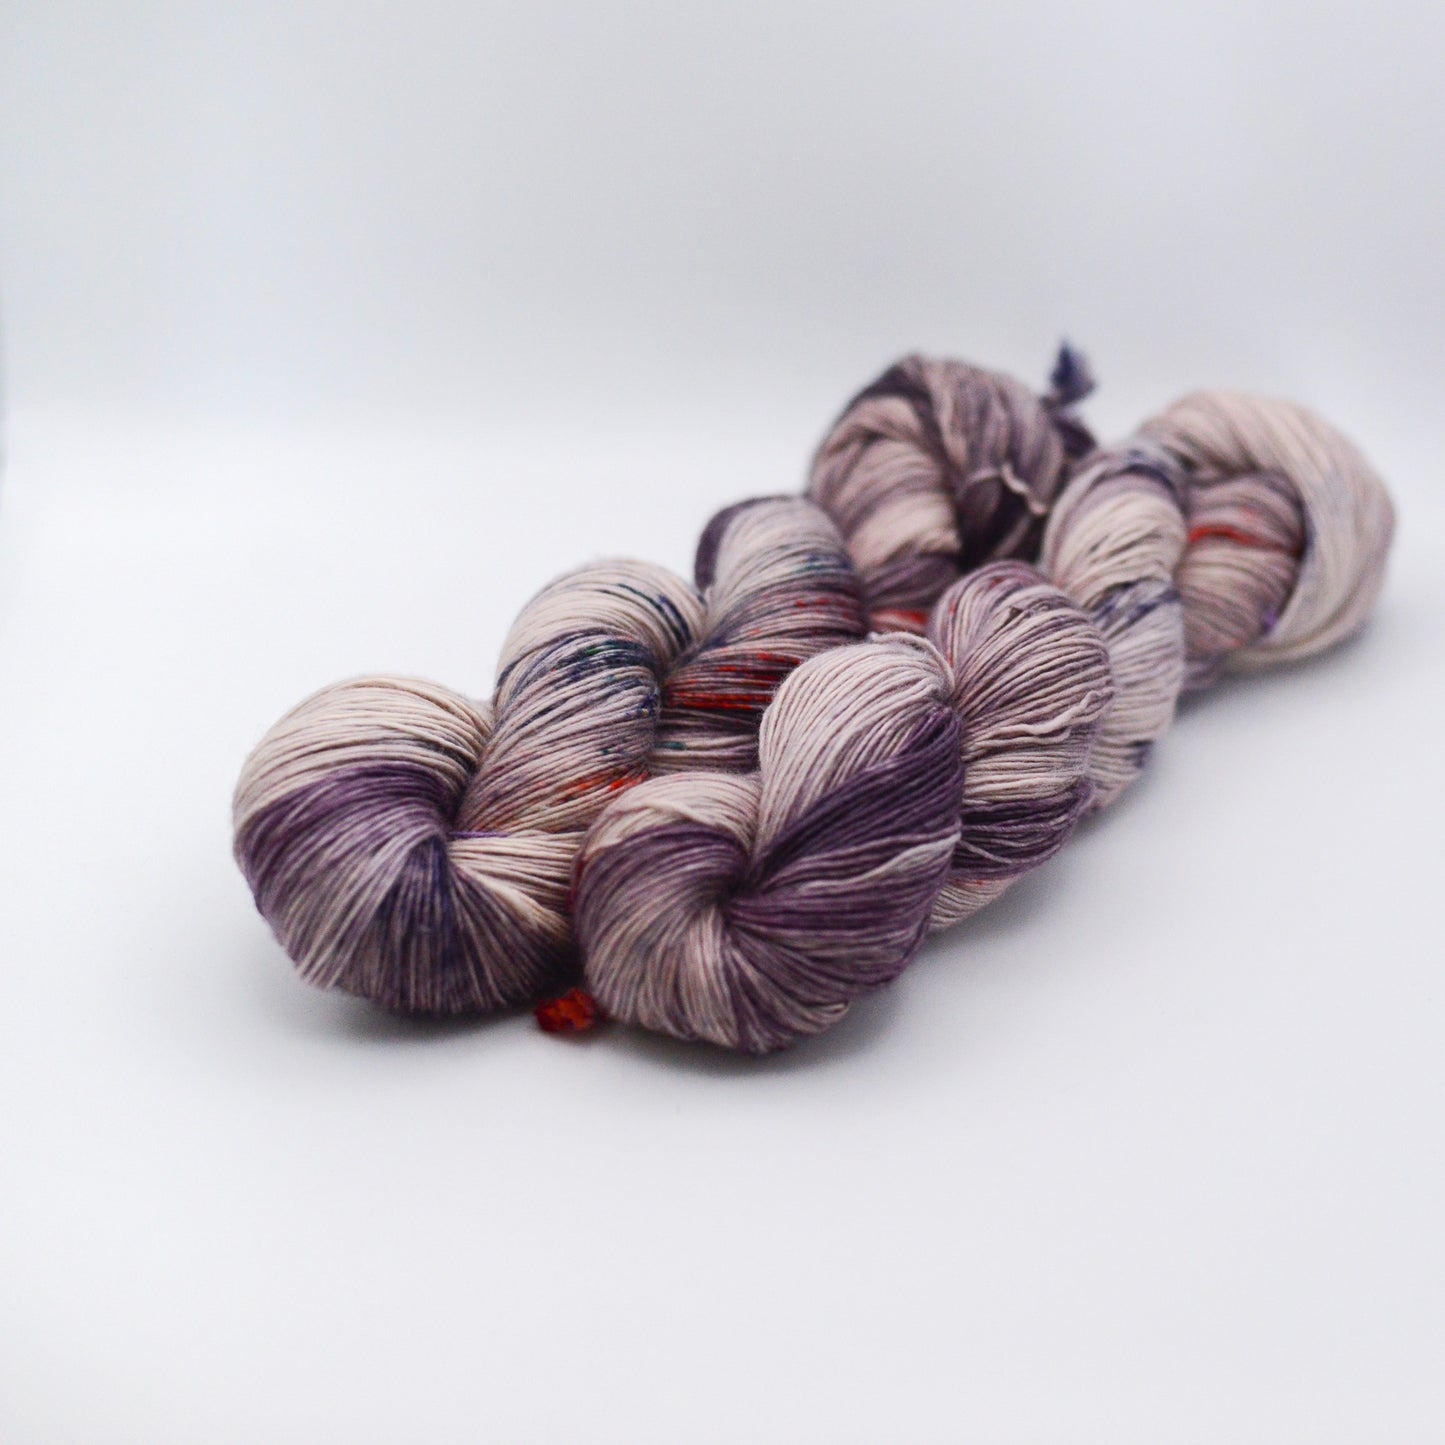 BKD Merino Singles - Lucky Strike discount, hand dyed yarn